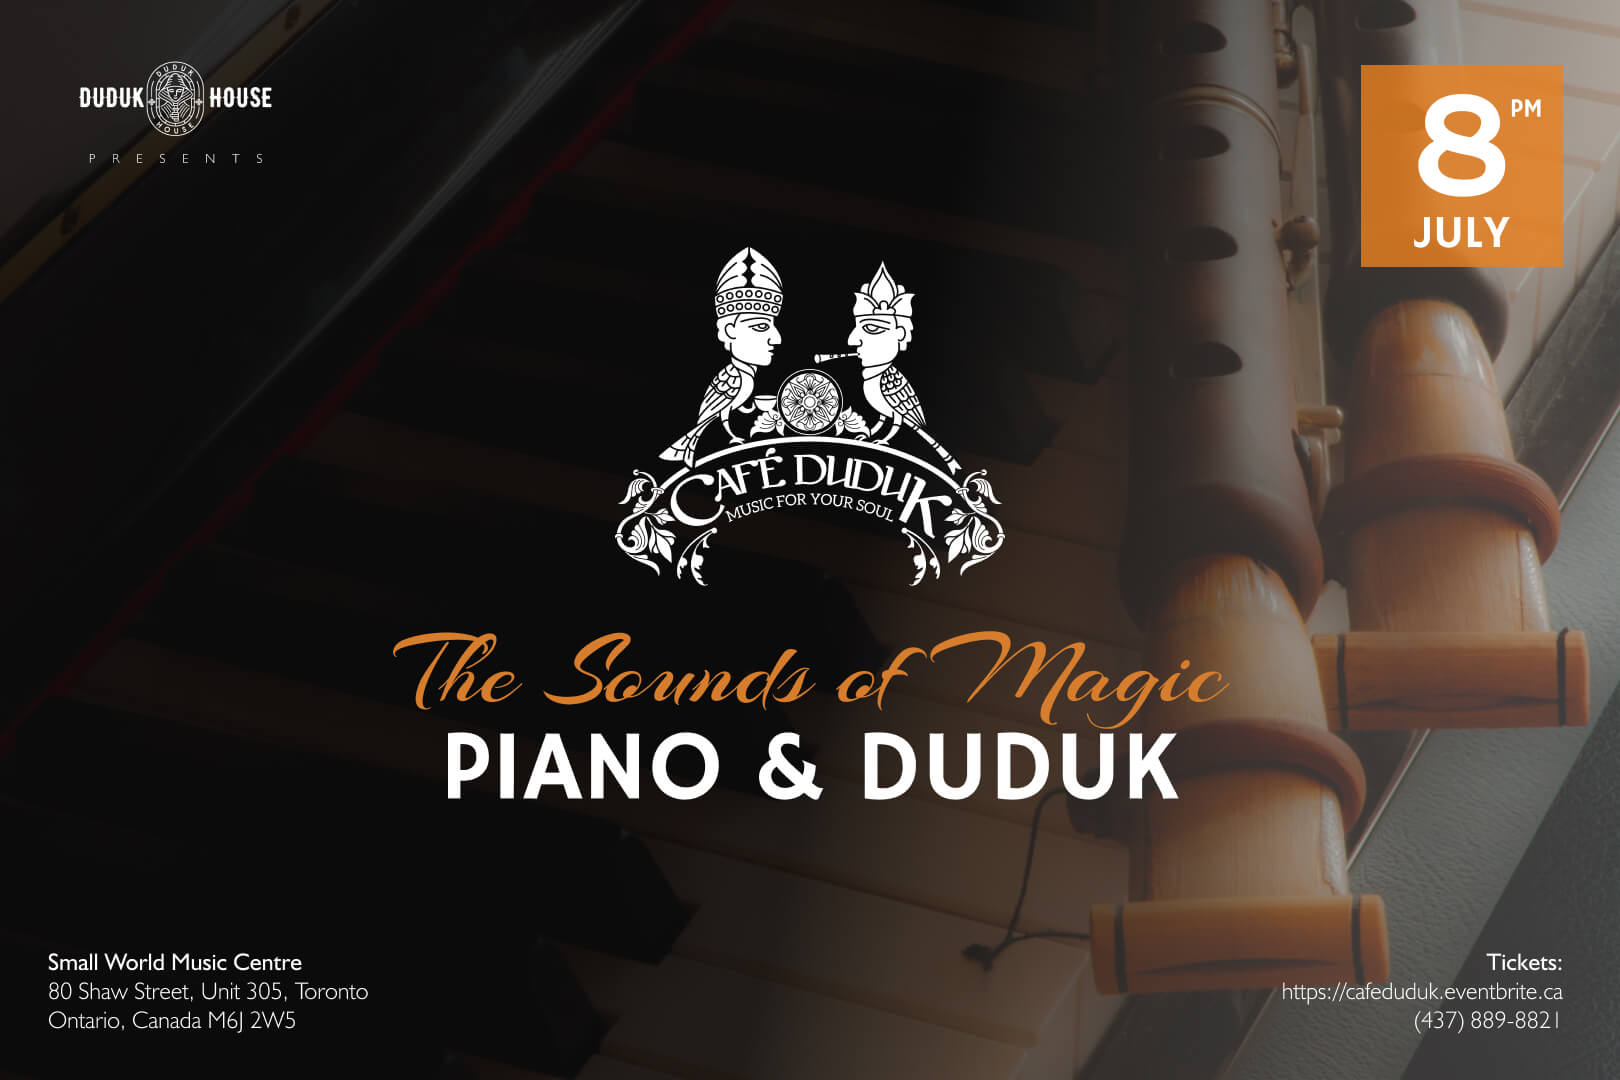 Duduk and Piano: Sounds of Magic